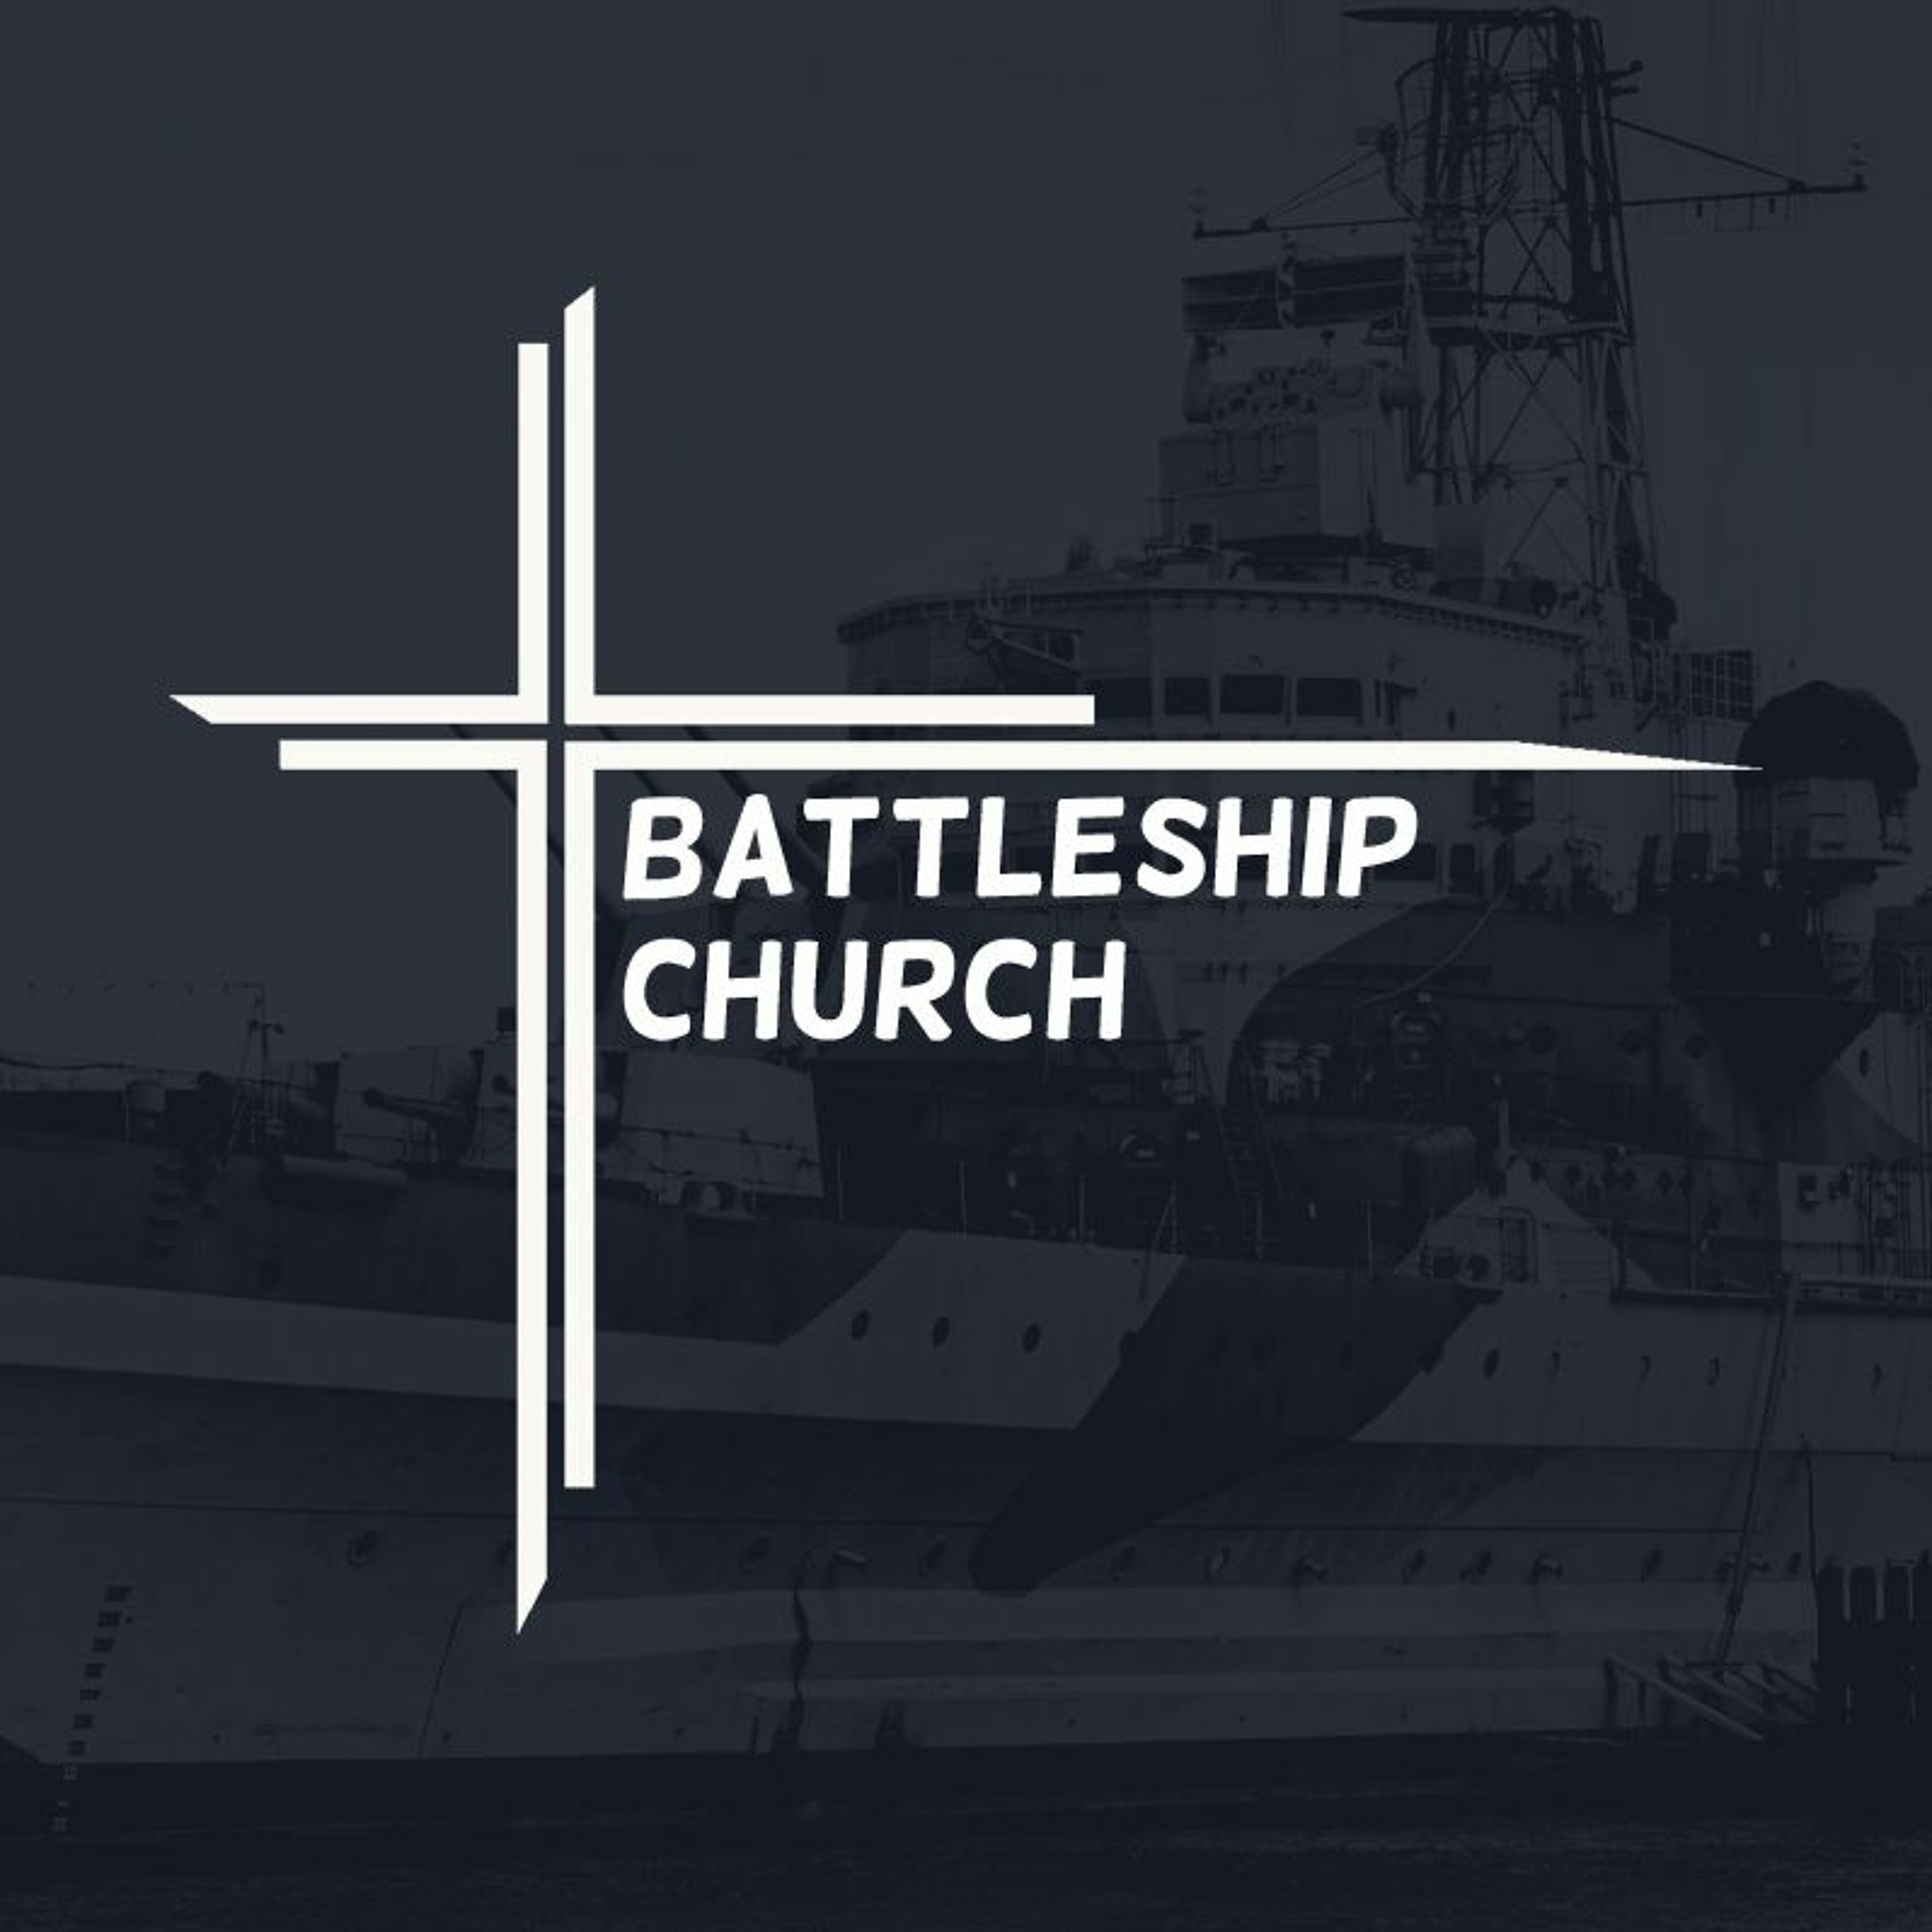 Battleship church | Membership